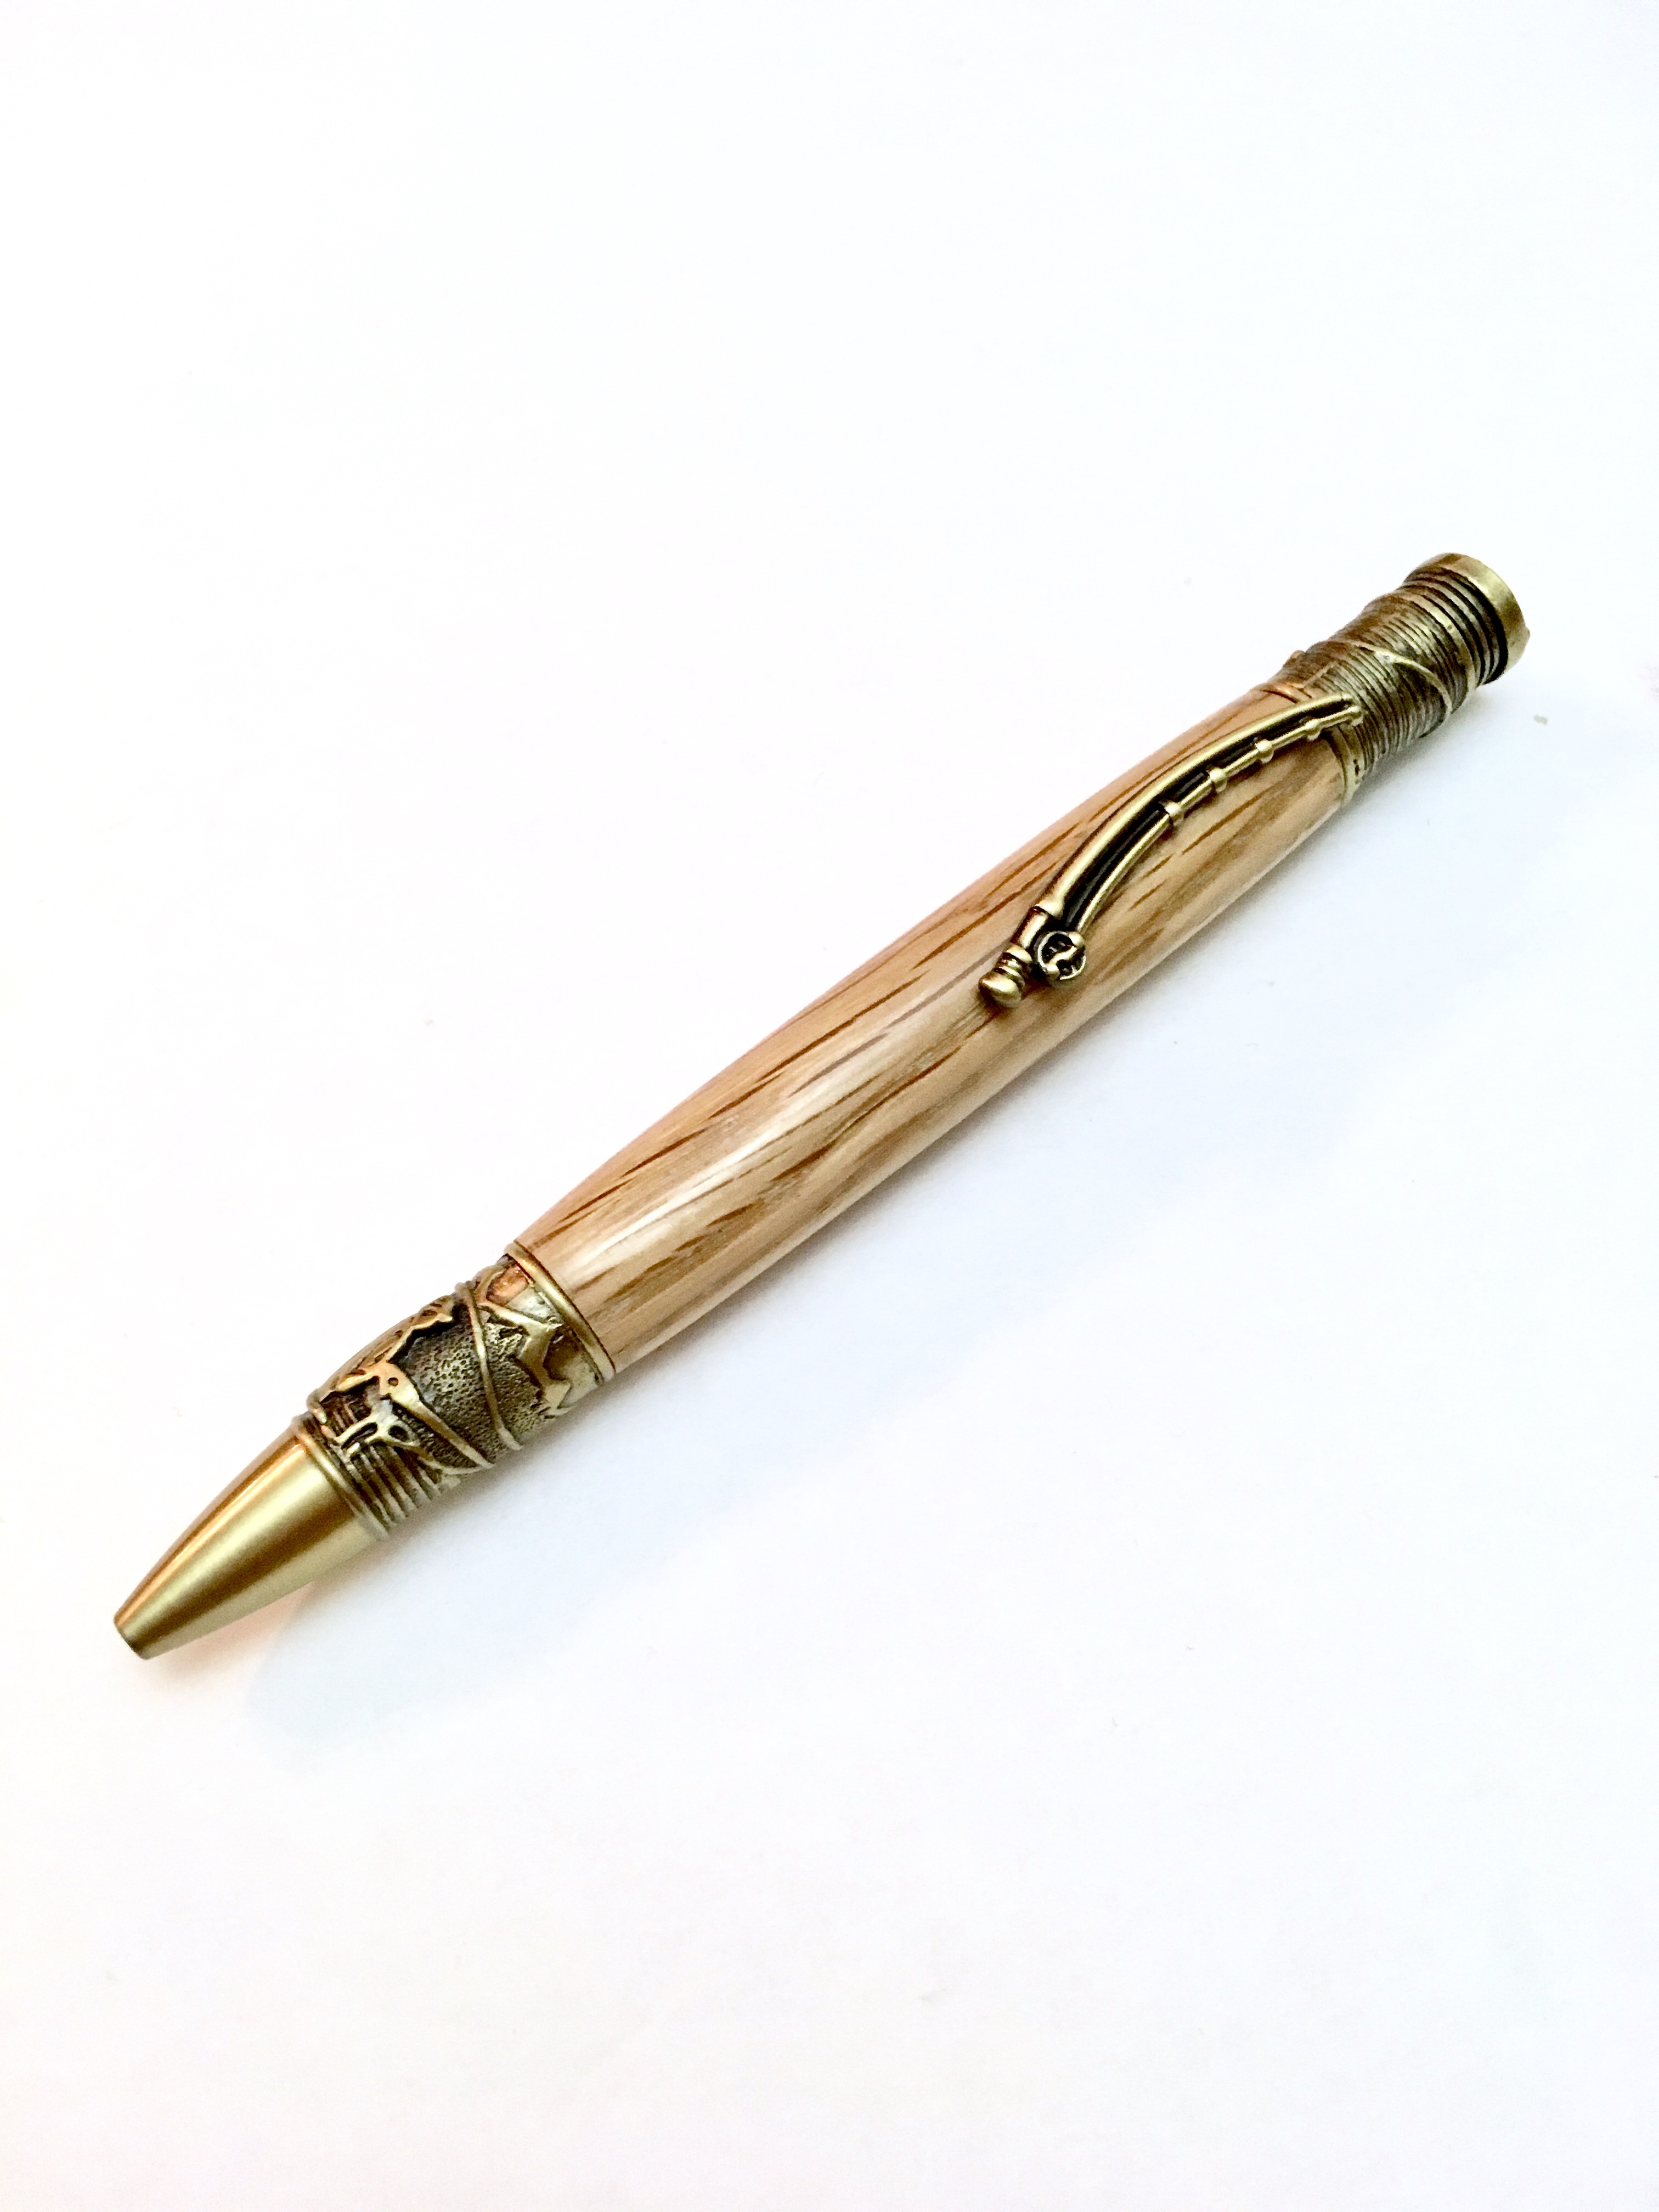 Antique brass fly fishing ballpoint pen